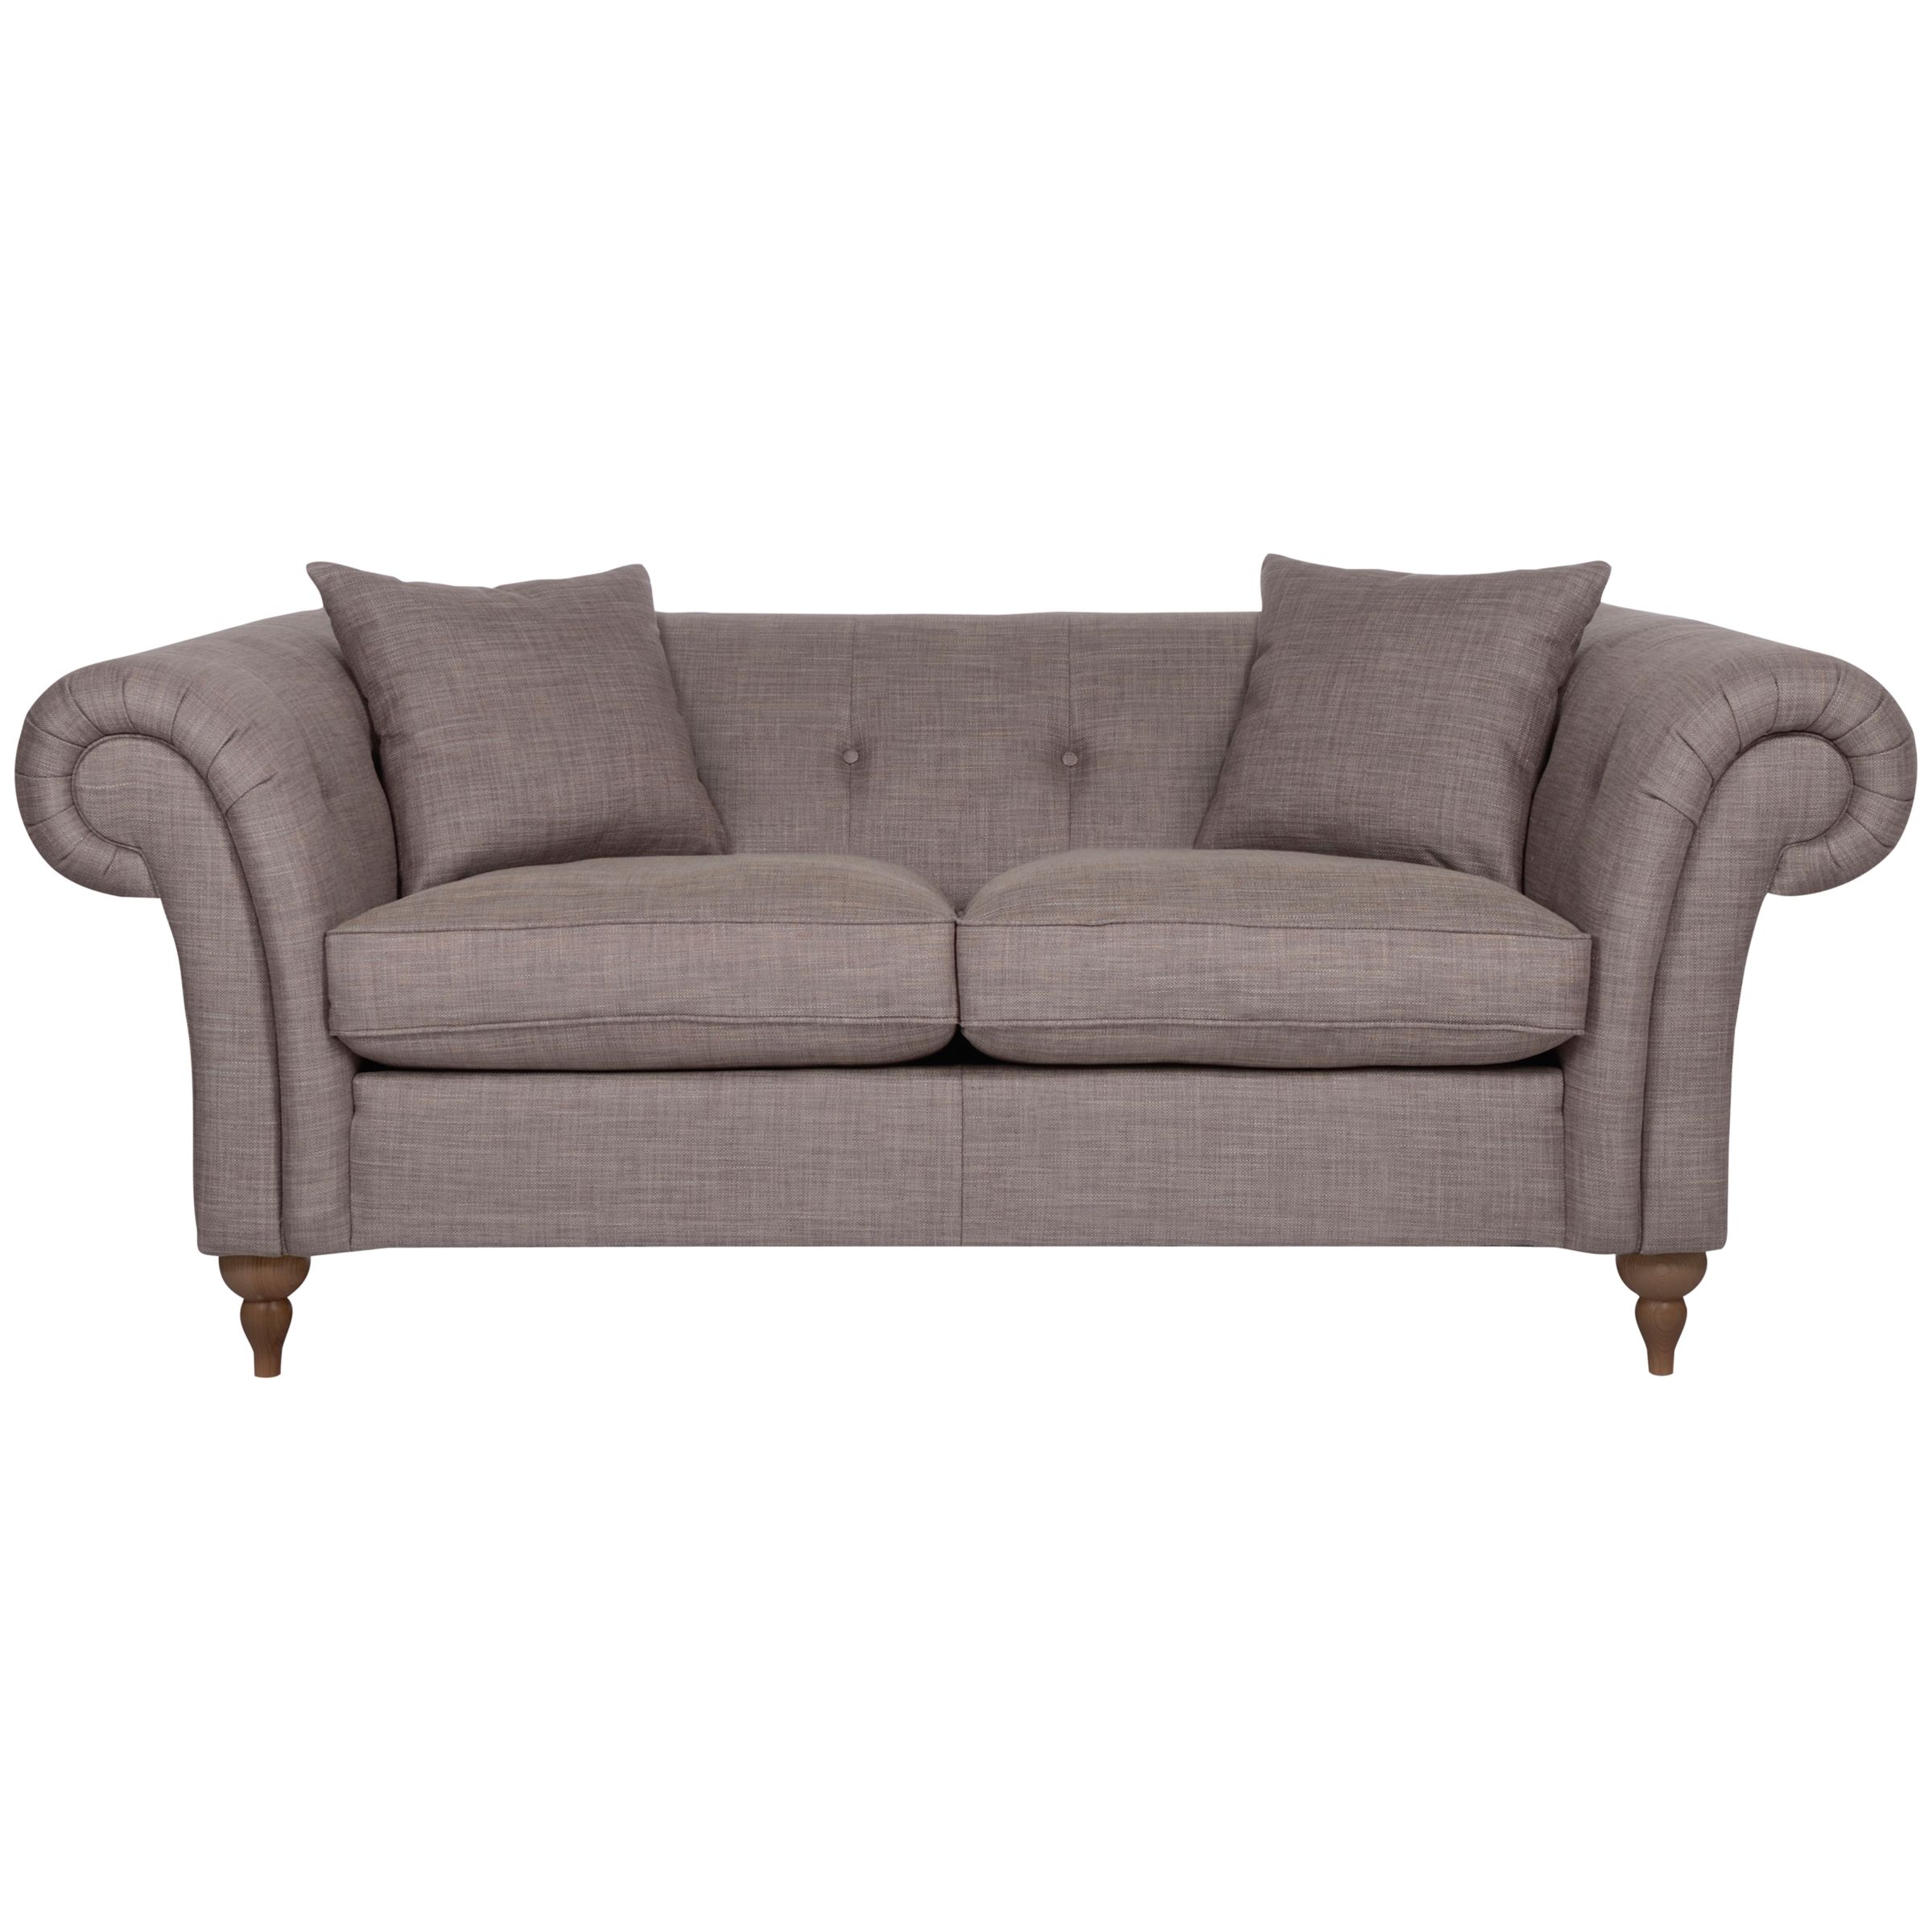 John Lewis Joshua Medium Sofa, Fabrizio in Putty, width 190cm